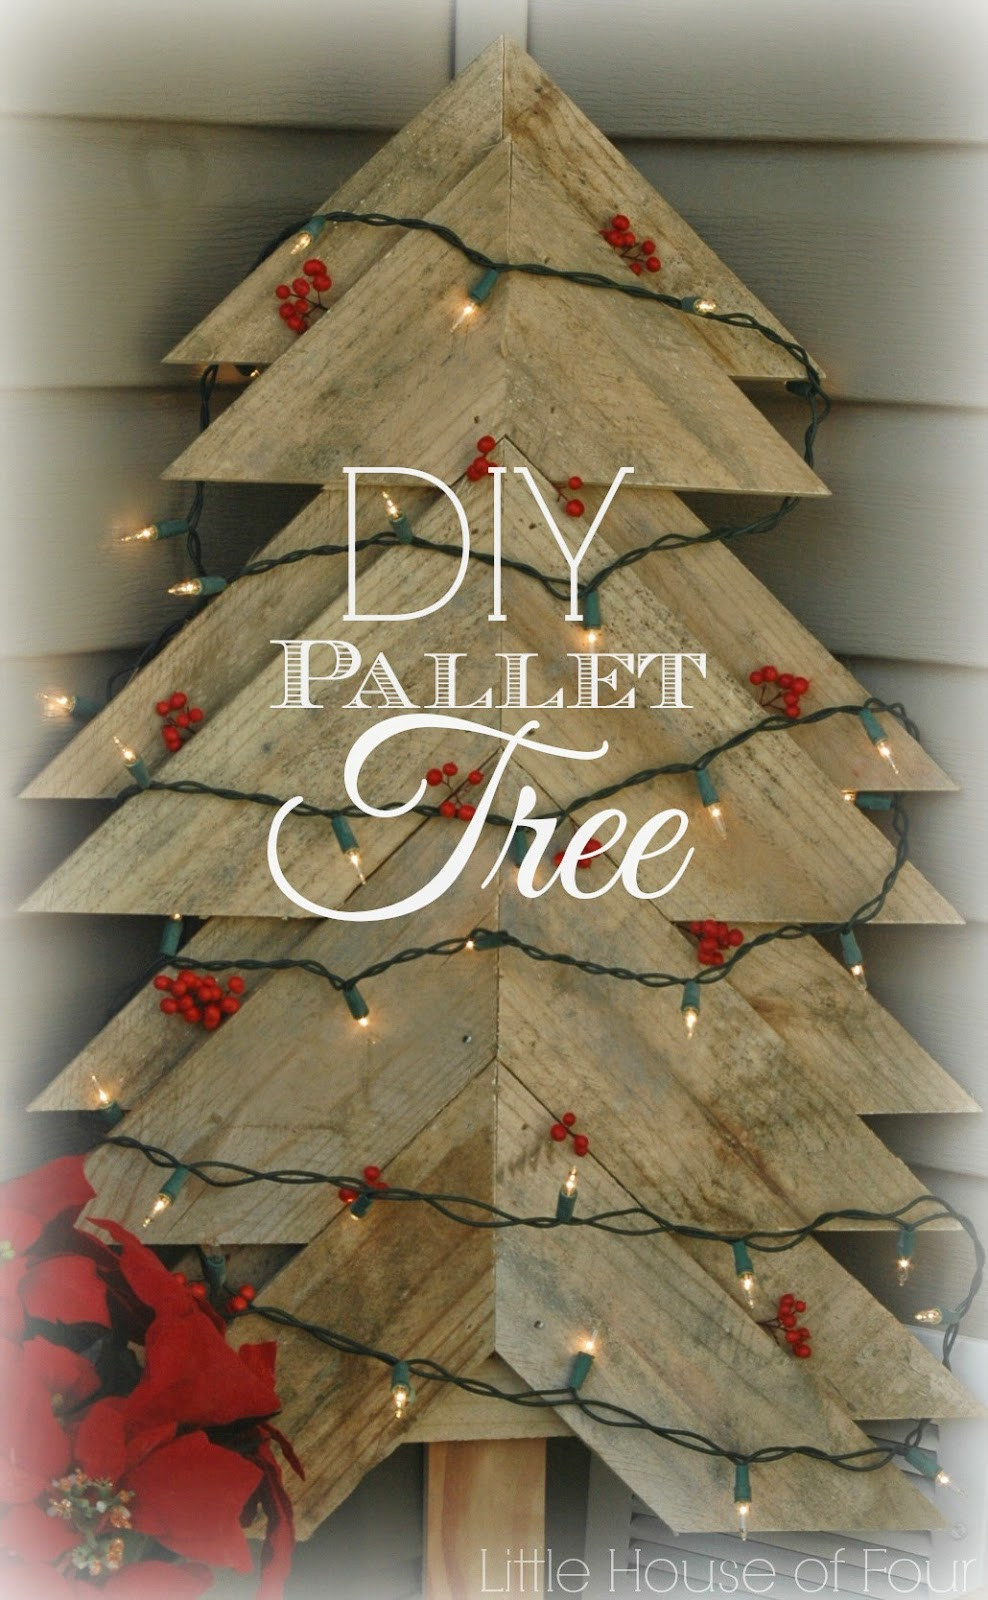 DIY Pallet Christmas Trees
 Rustic Pallet Christmas Tree